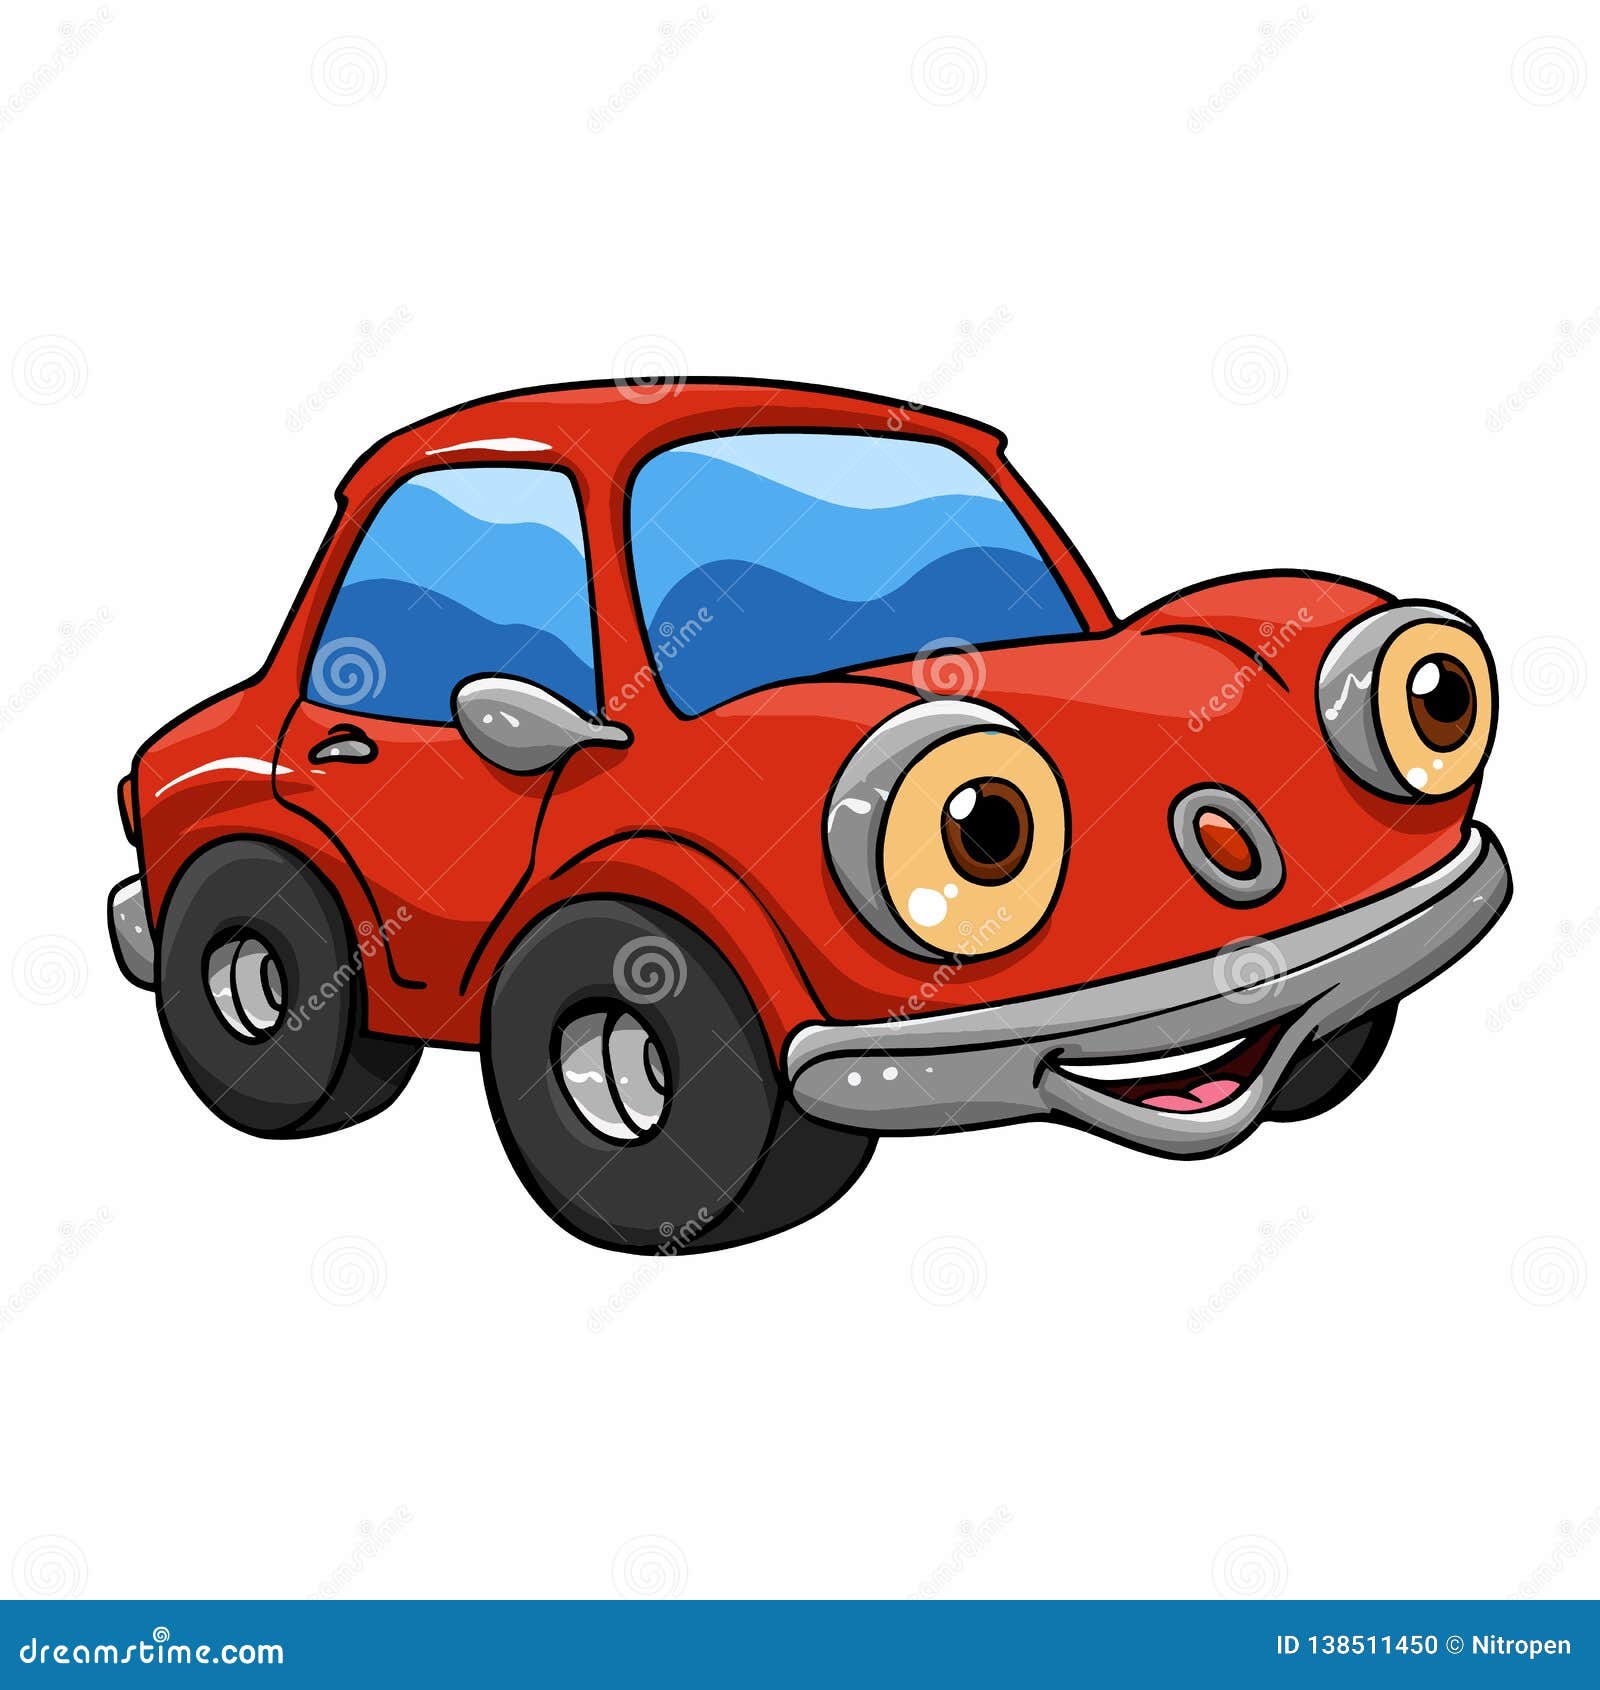 Funny Cartoon Cars - Red Car Cartoon Stock Vector - Illustration of cutie,  vintage: 138511450